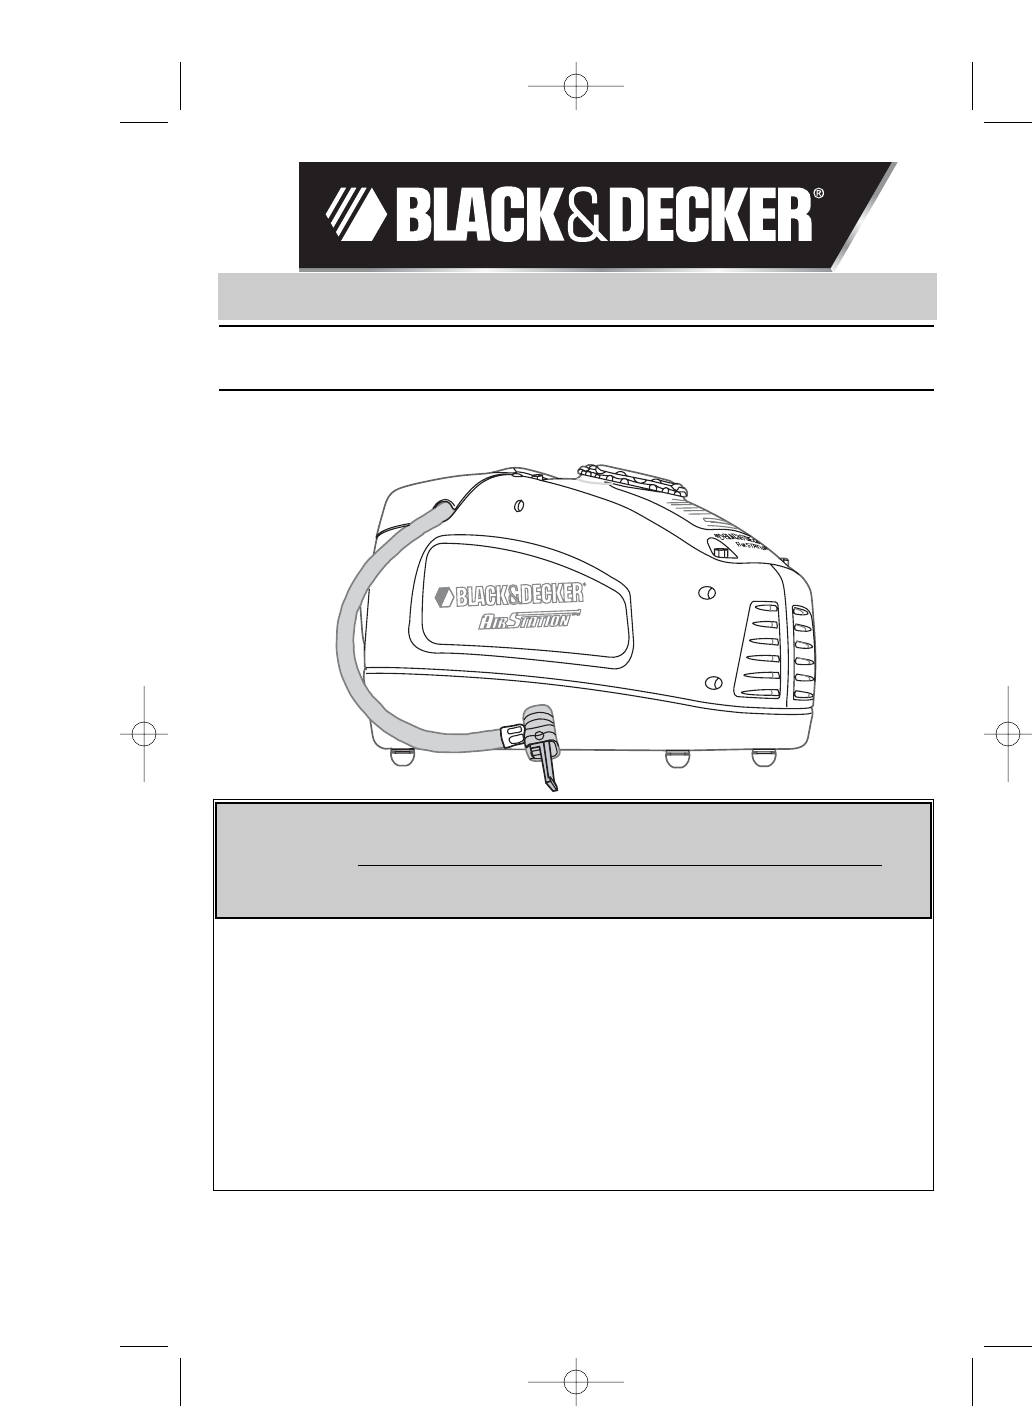 BLACK+DECKER ASI300 Air Station Inflator 